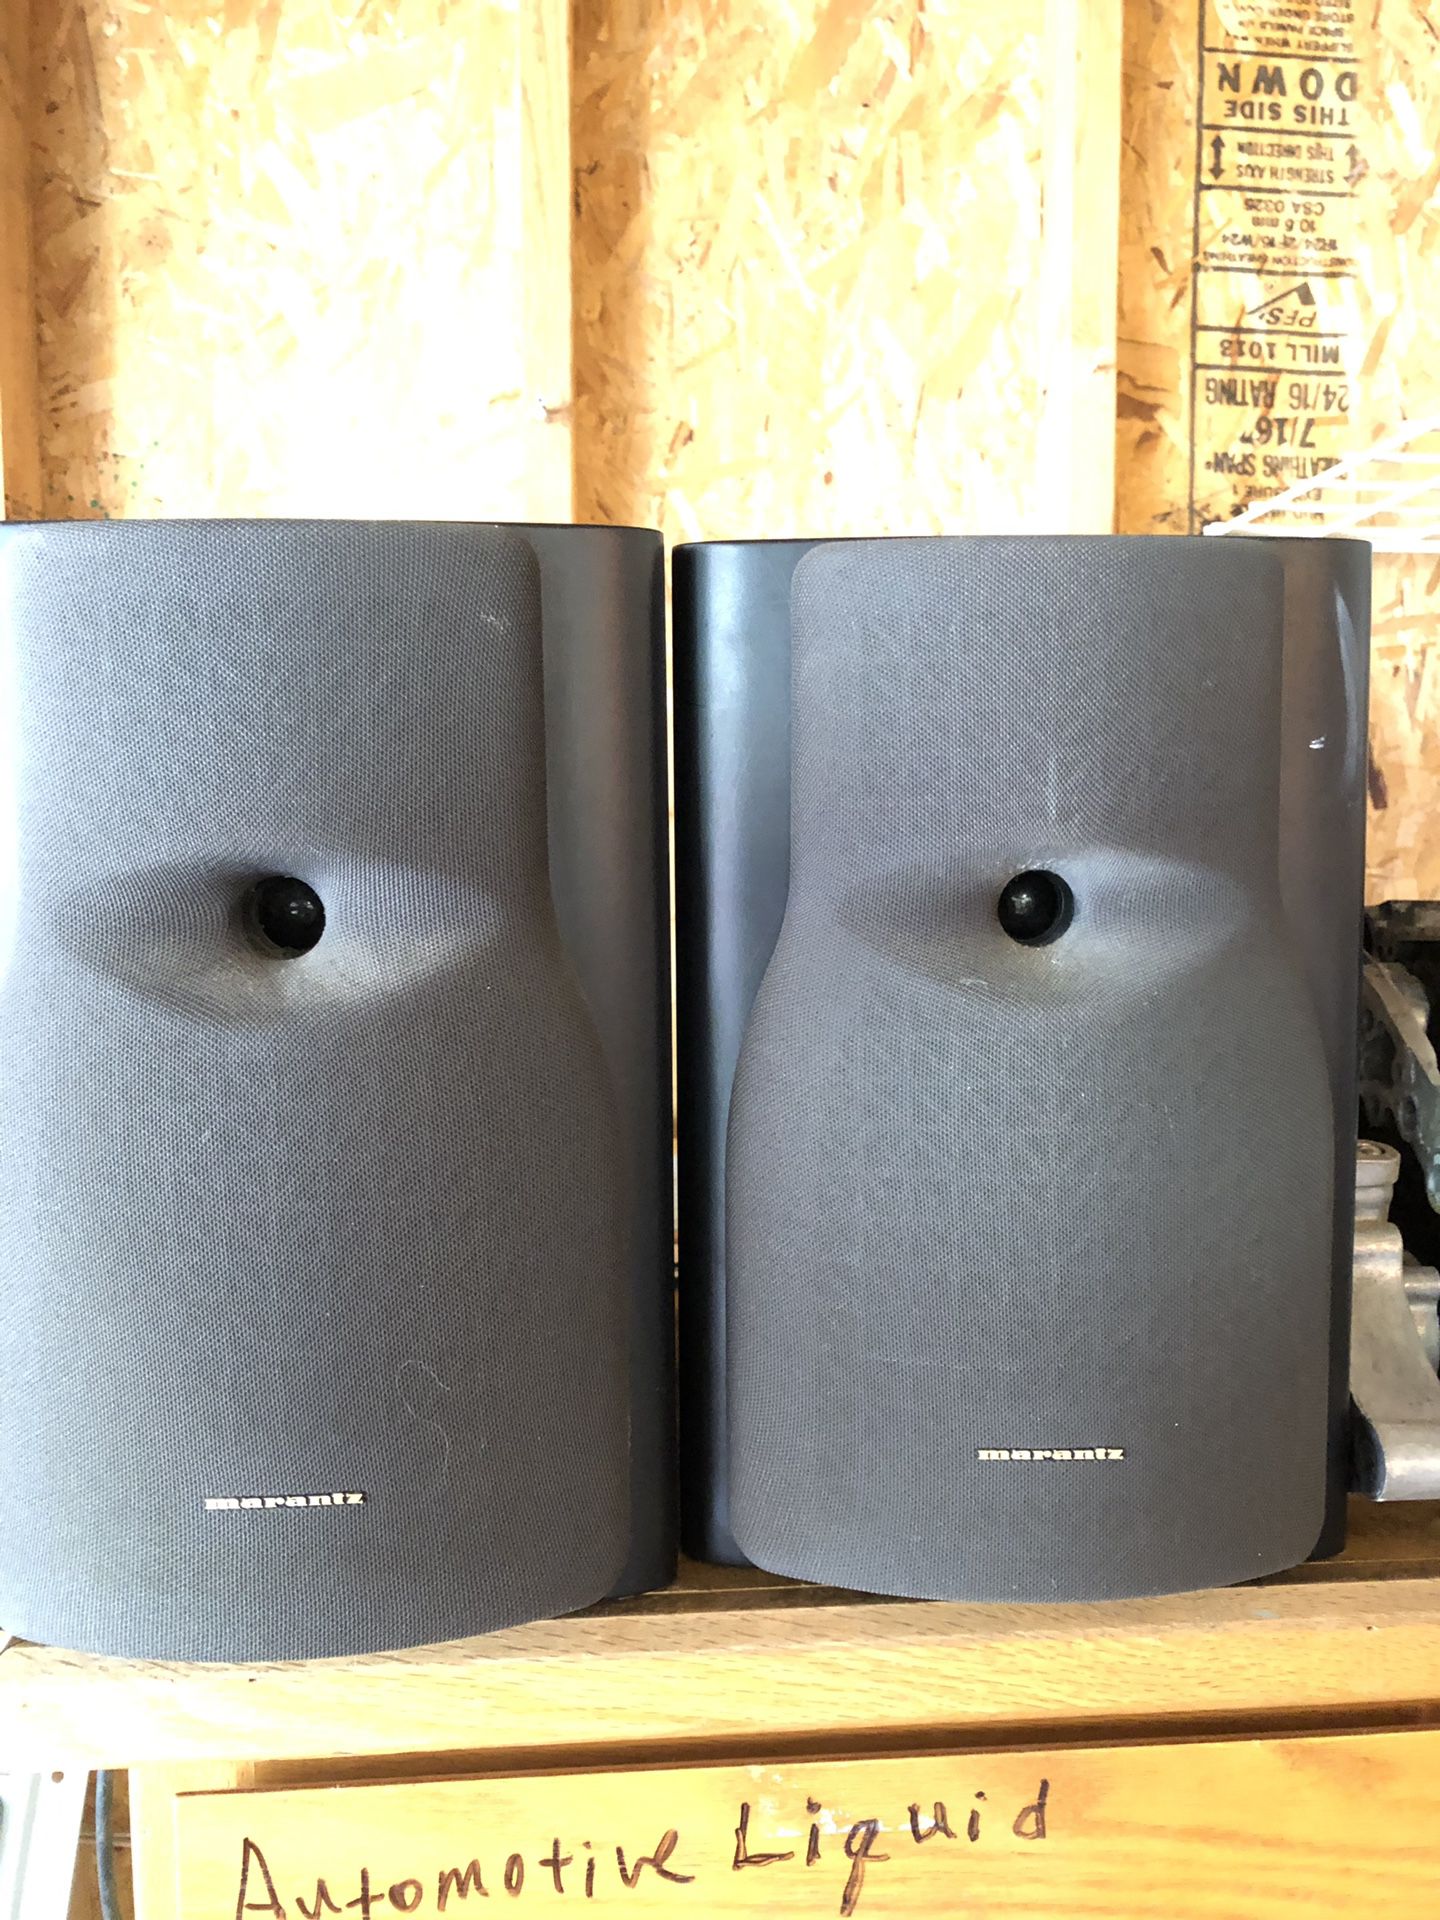 Marantz speakers